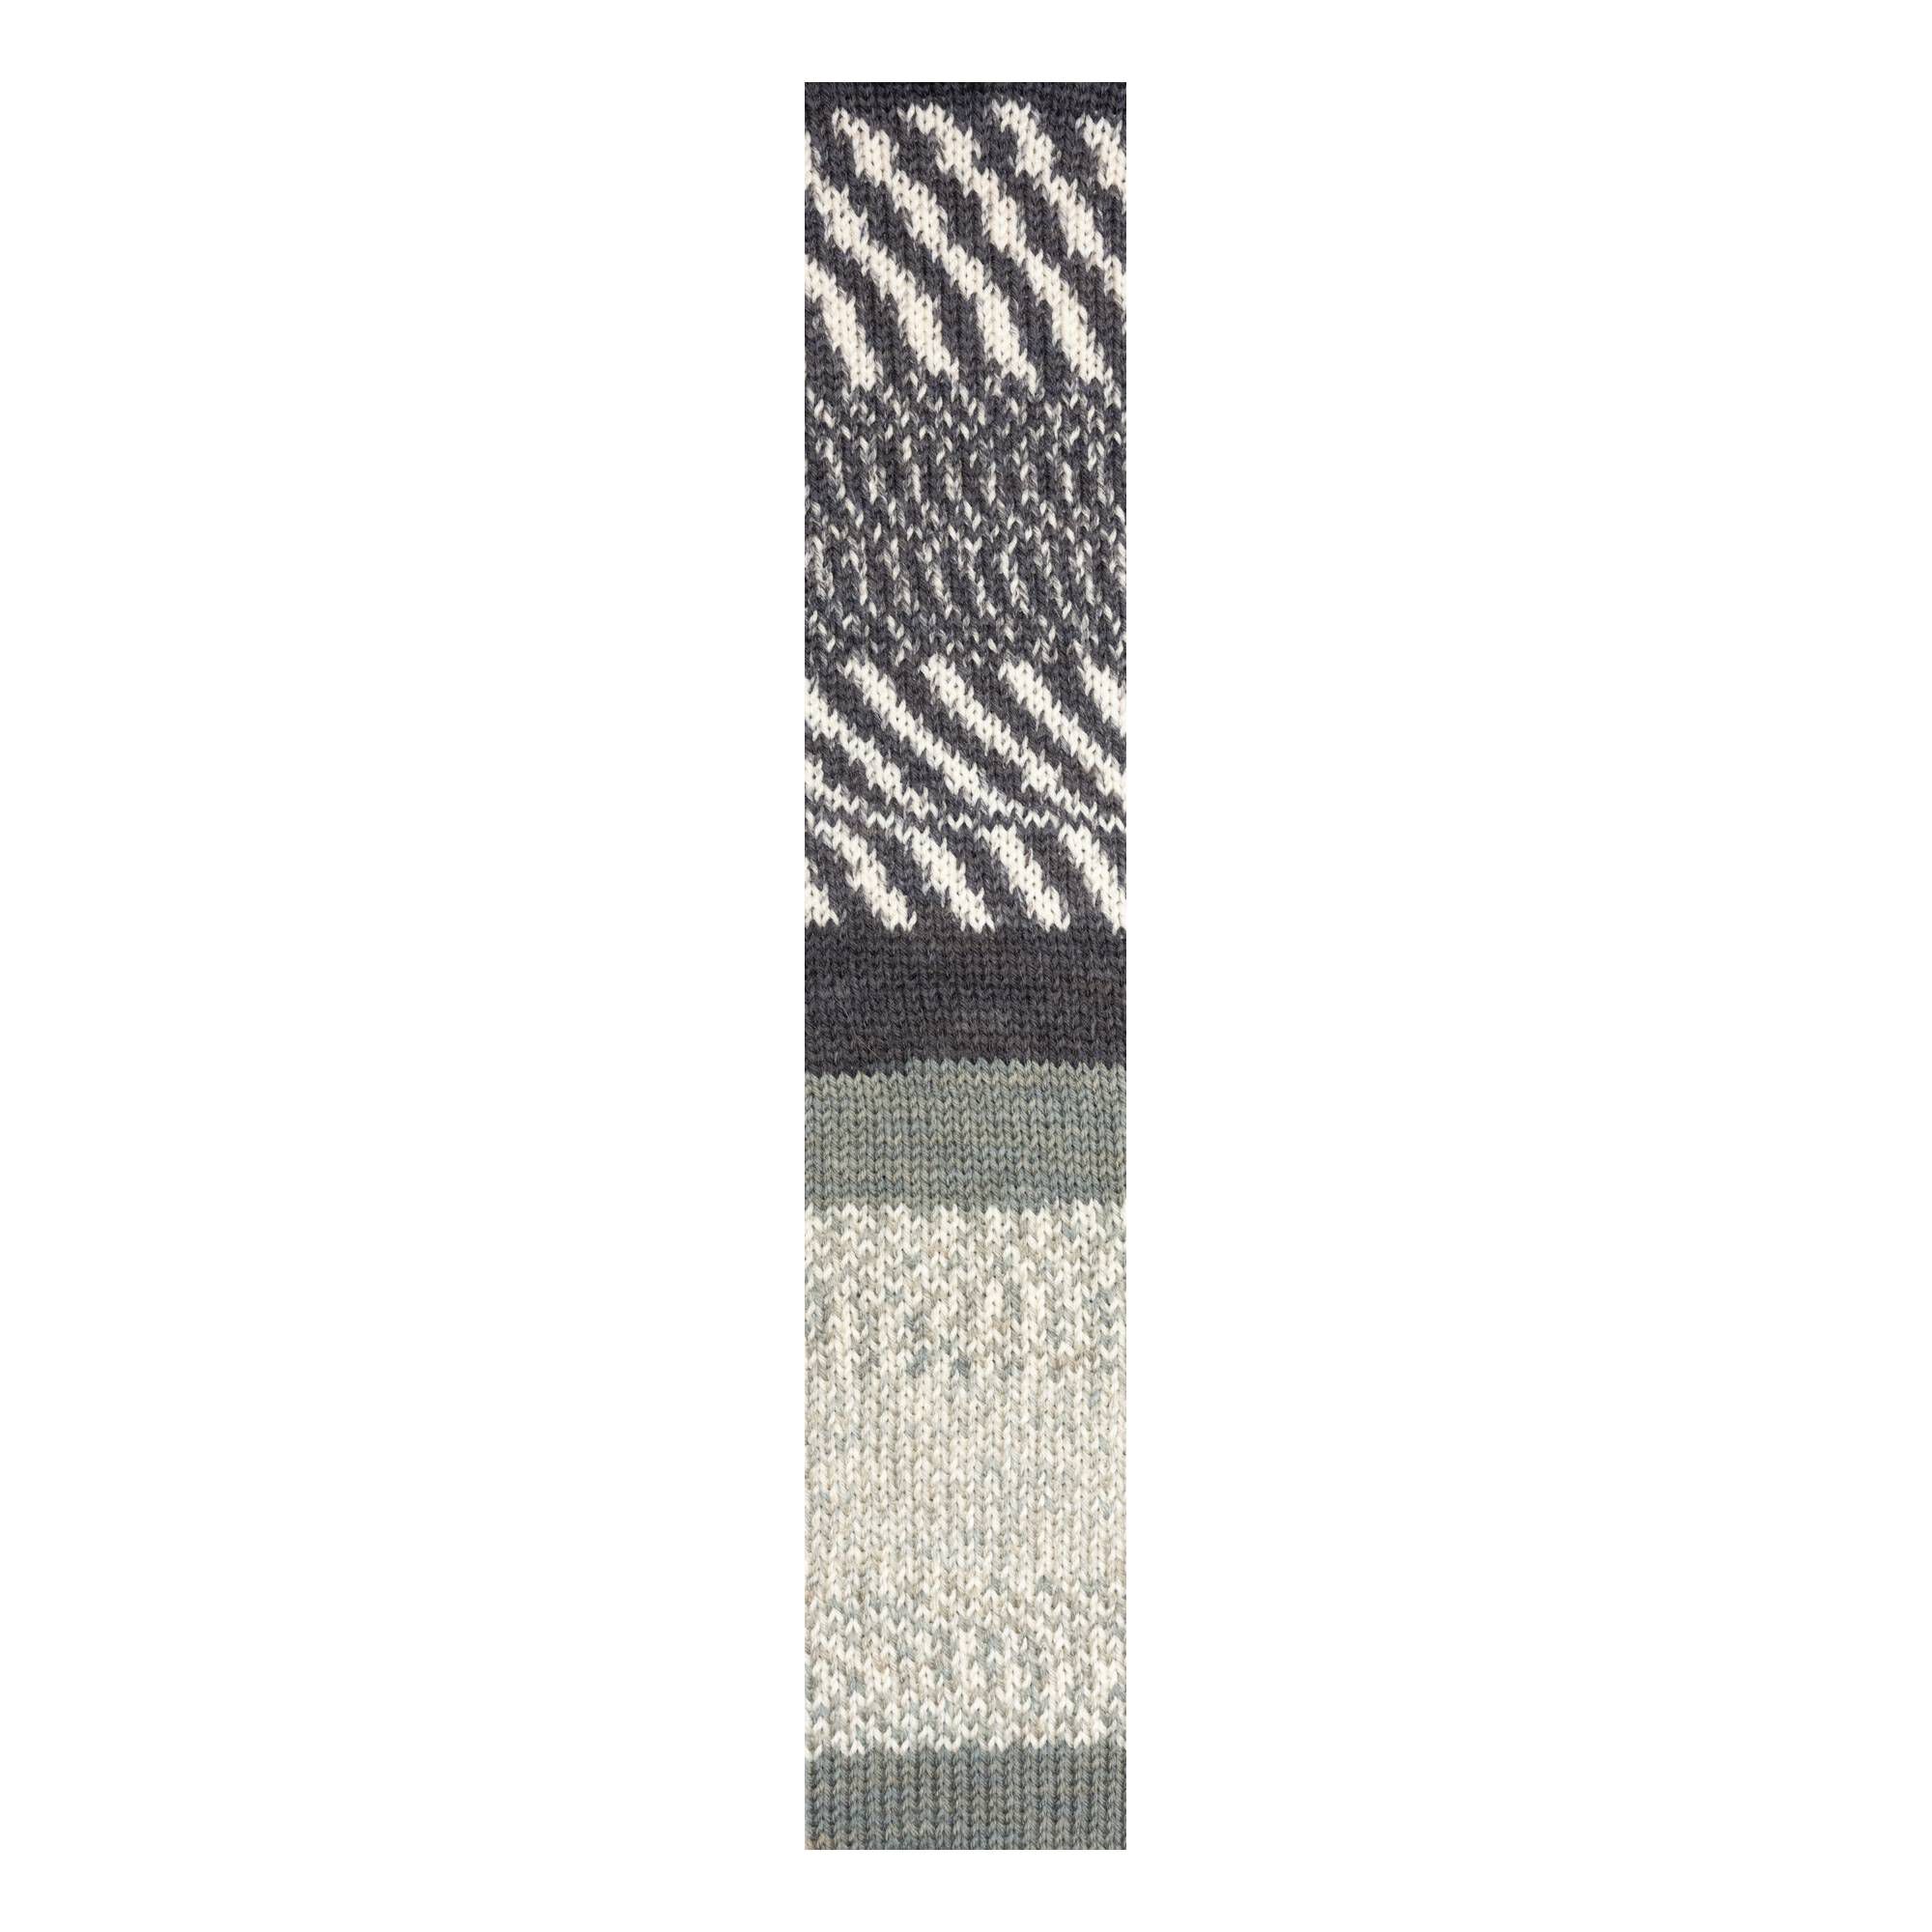 Lion Brand Charcoal Wool-Ease Fair Isle Yarn 150g | Hobbycraft